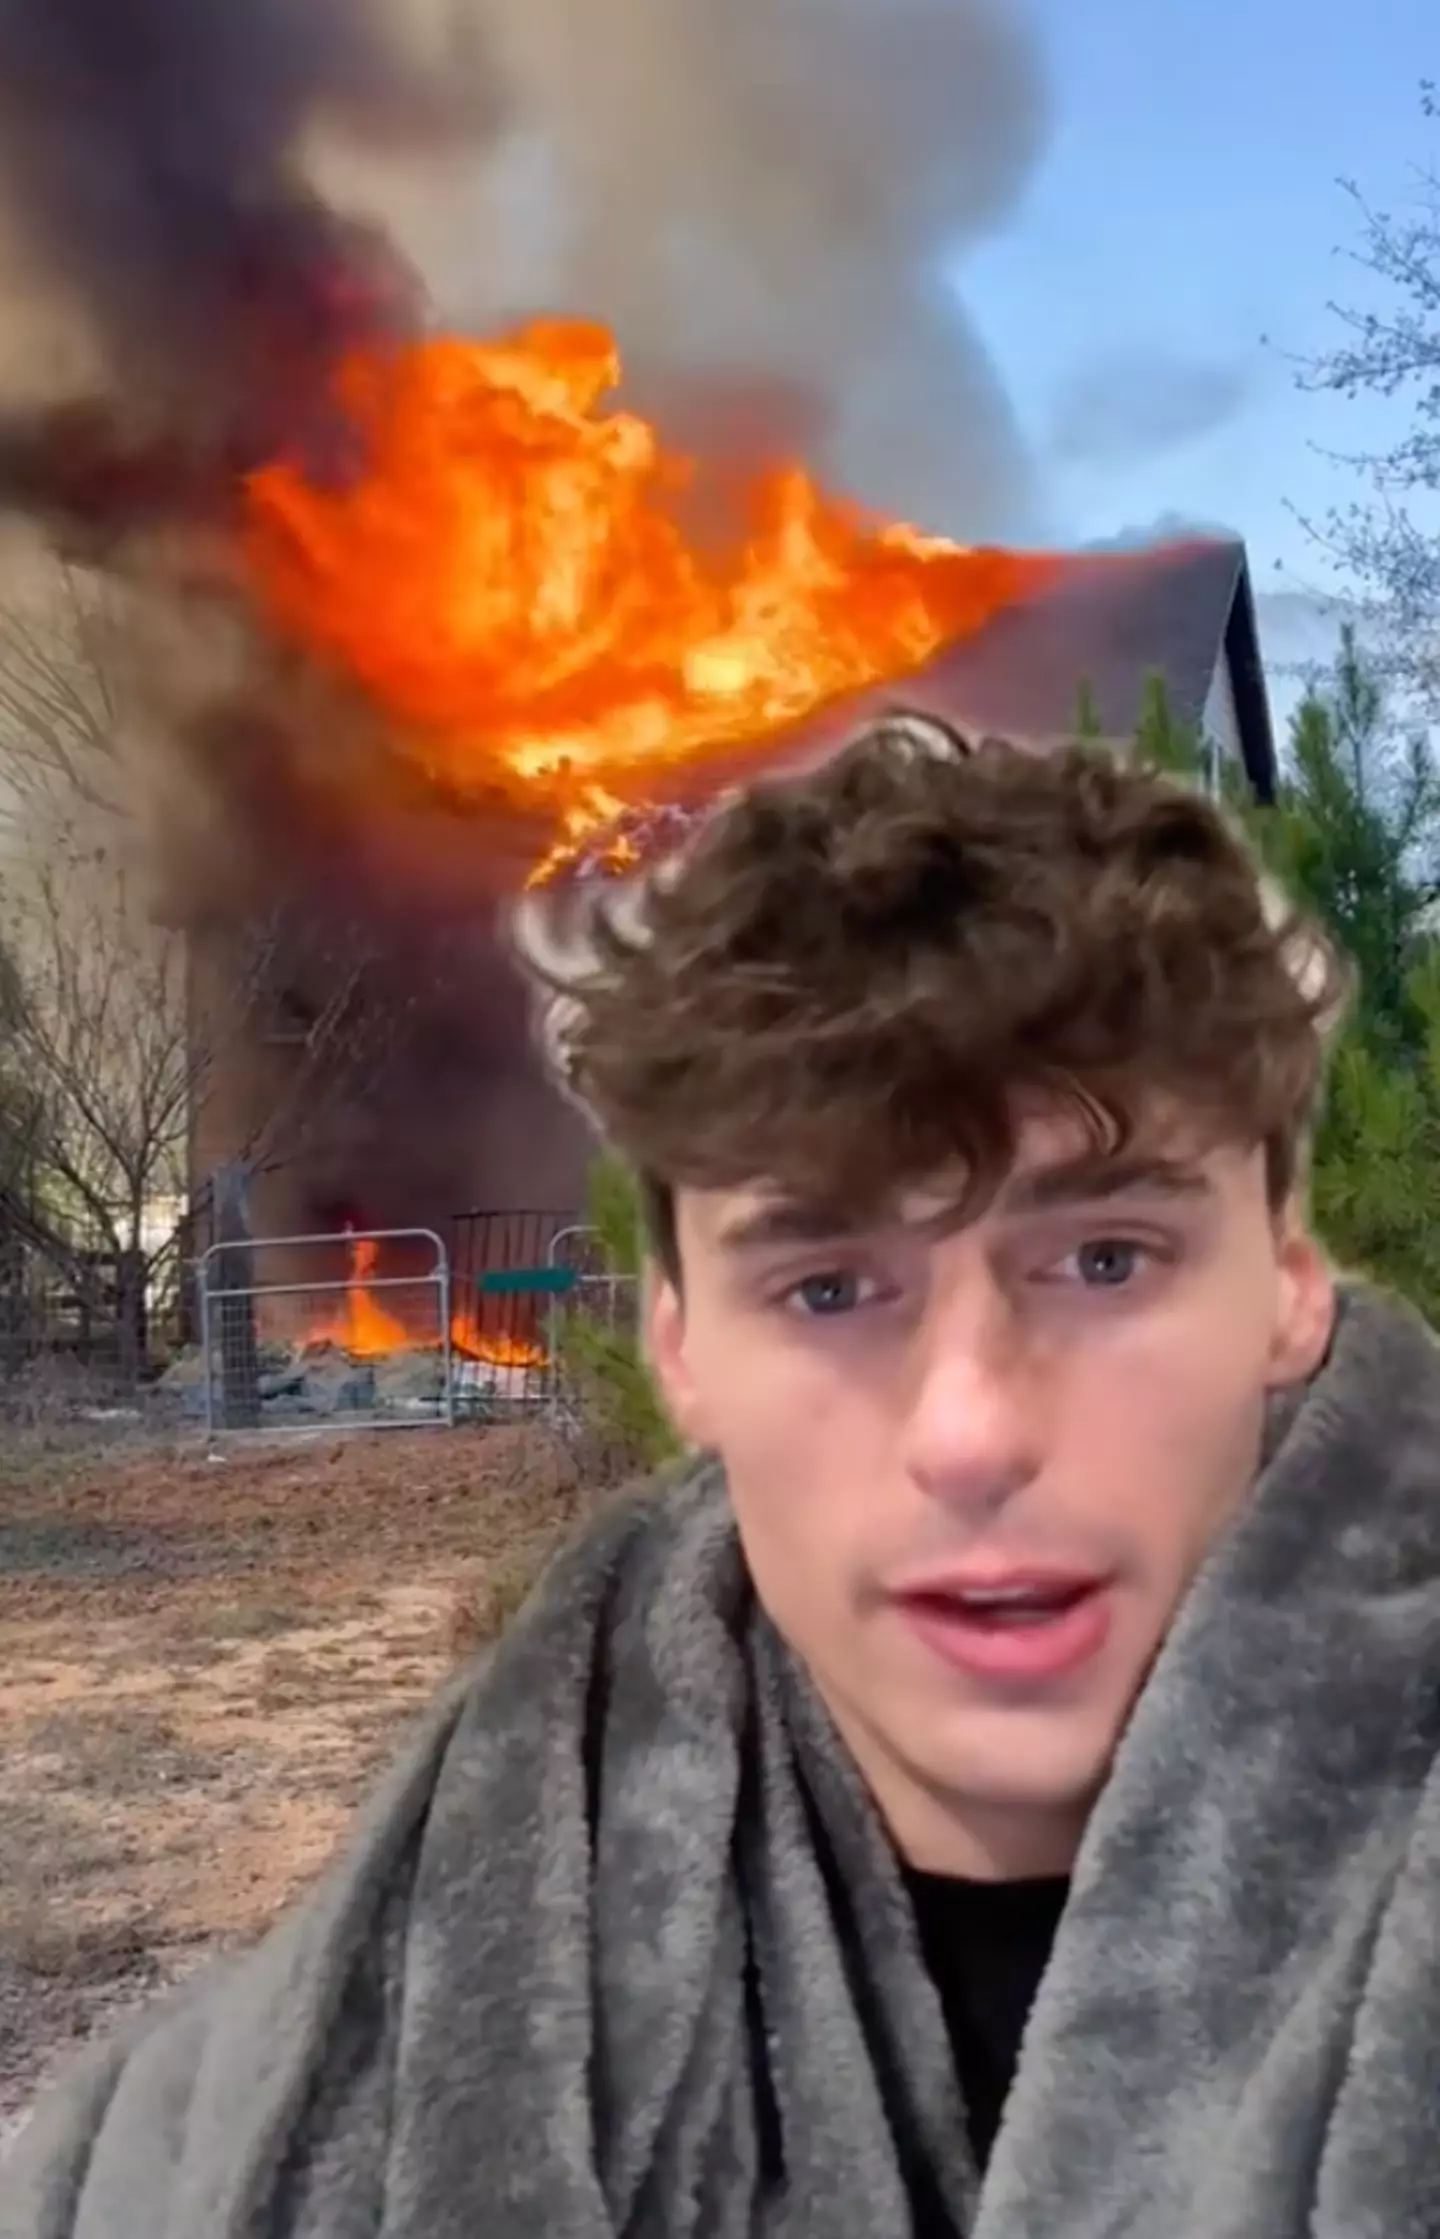 NoahGlennCarter shared videos of his house burning to TikTok.